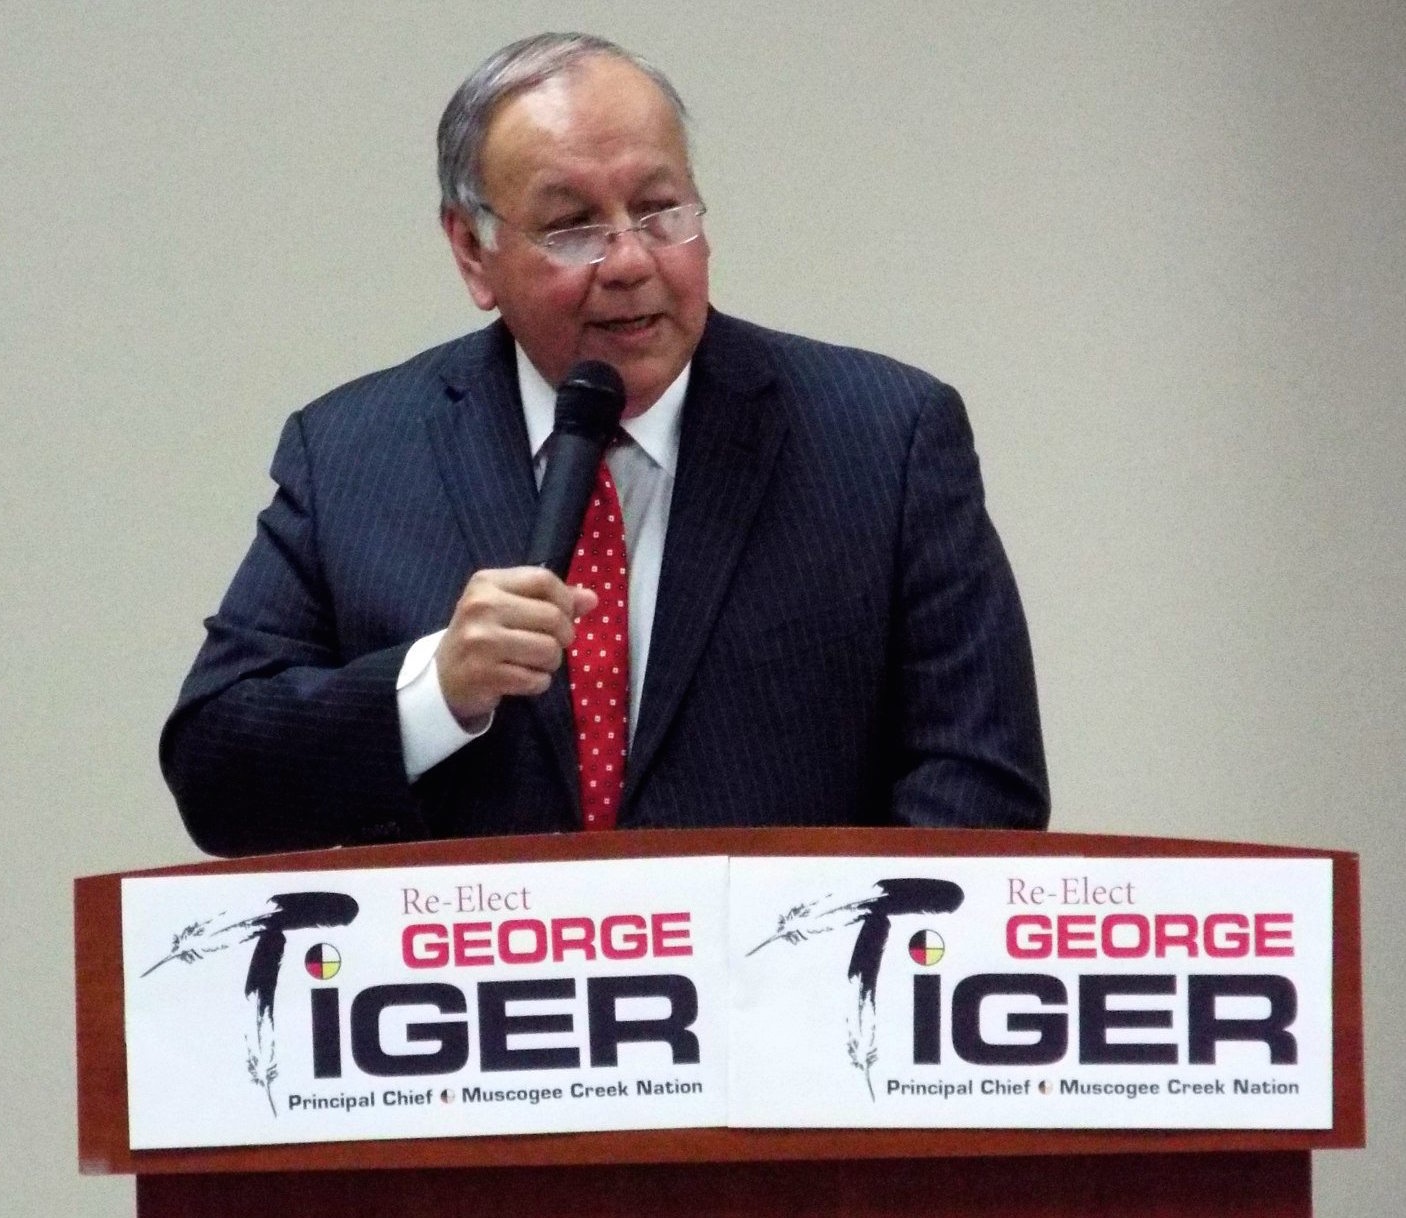 George Tiger seeks re-election as leader of Muscogee Nation